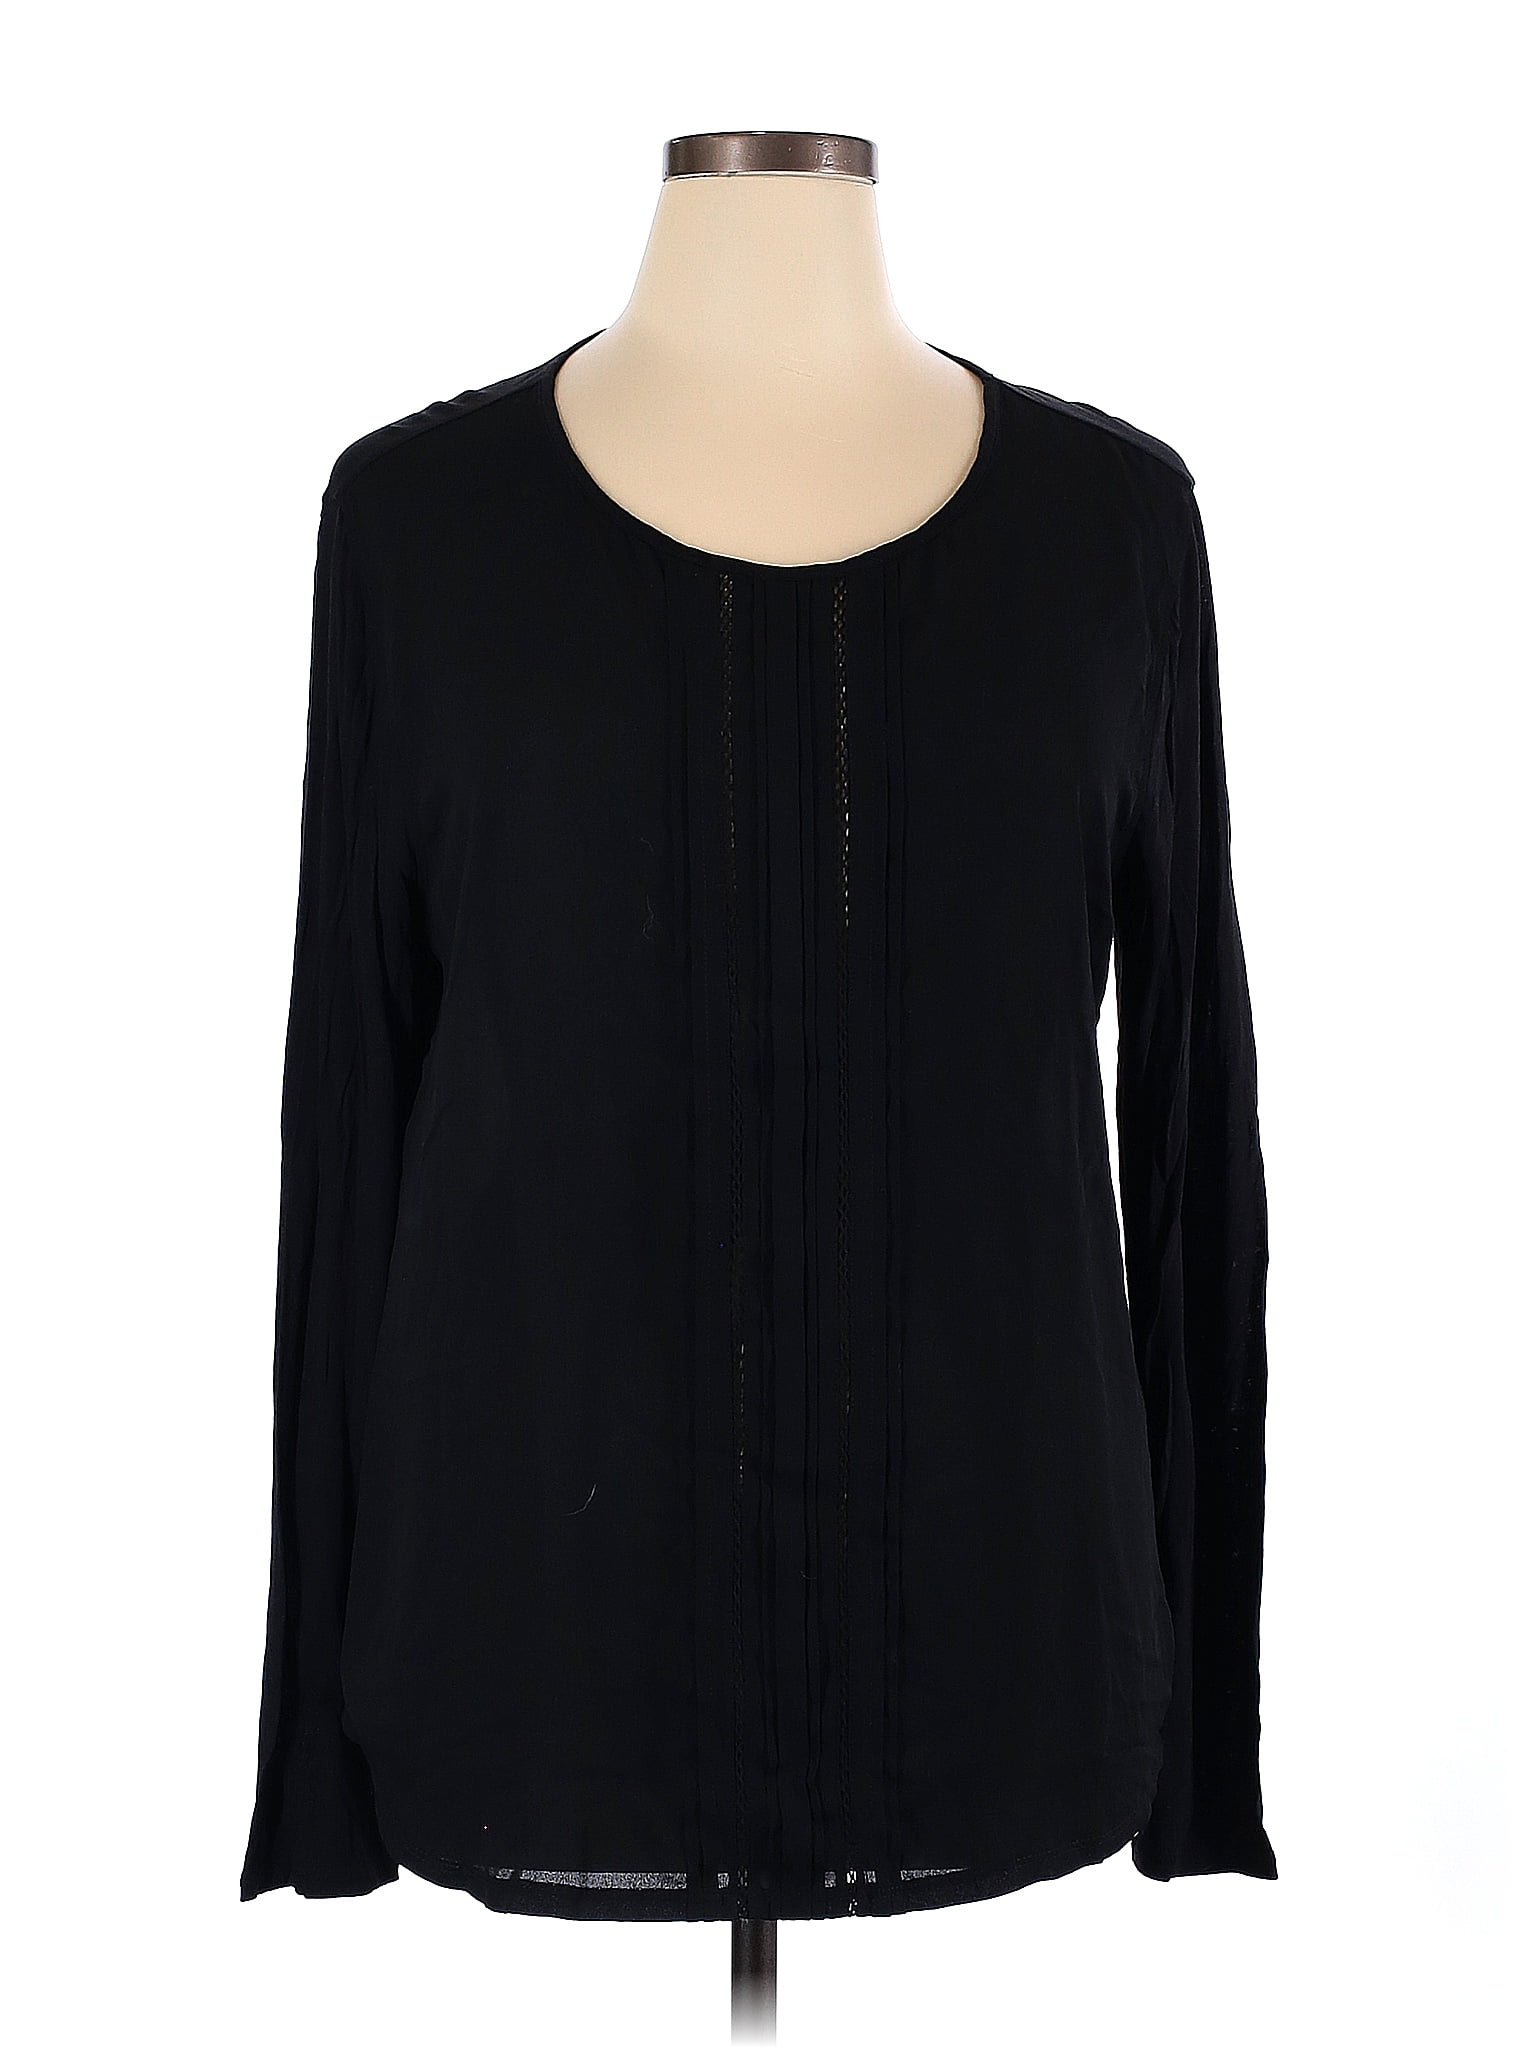 Ann Taylor LOFT 100% Polyester Solid Black Long Sleeve Top Size XXL ...